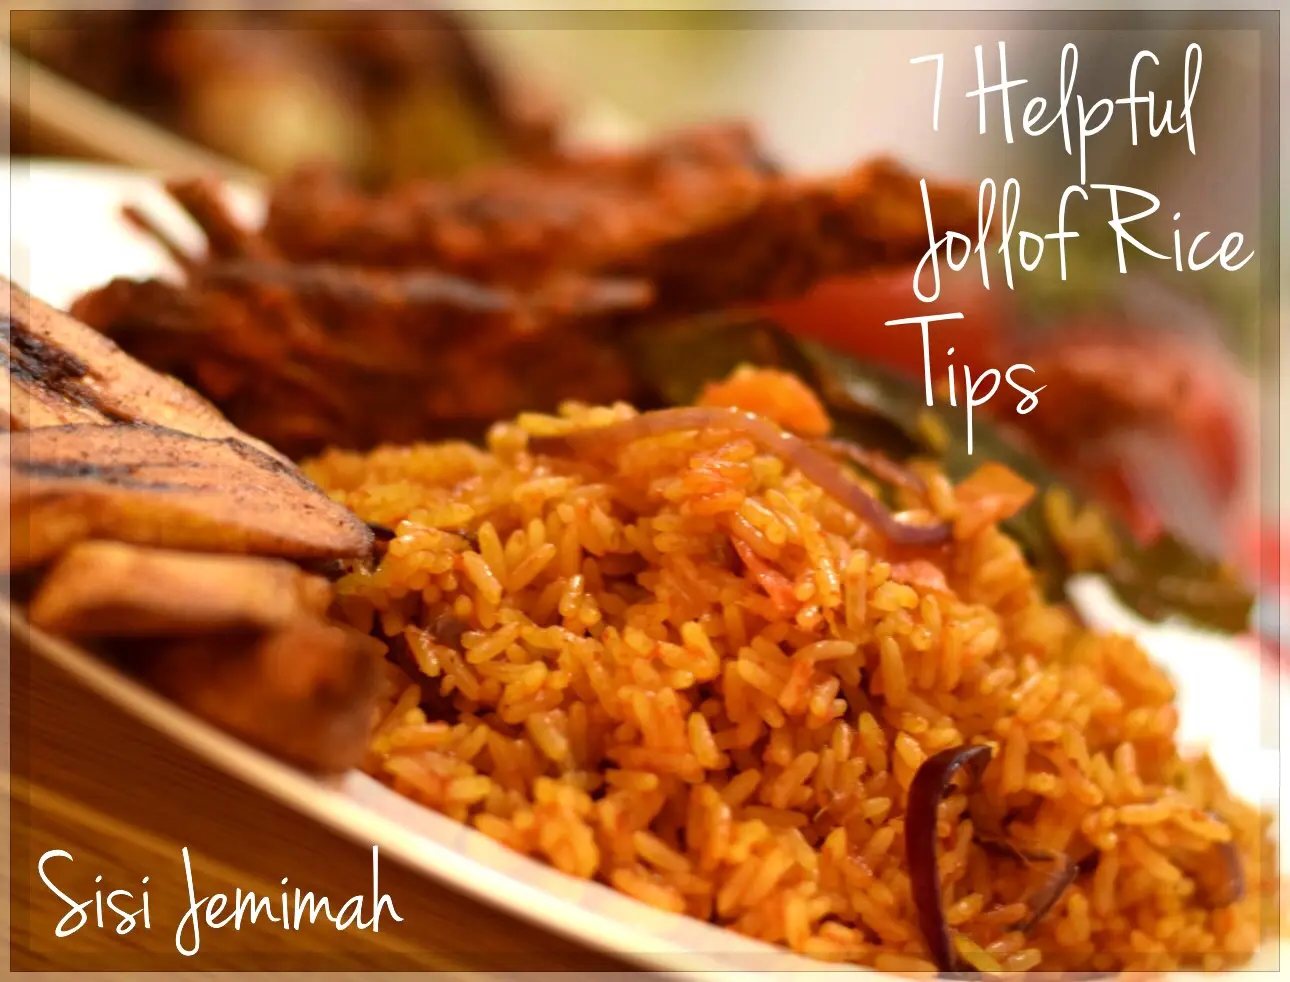 smoked jollof rice recipe - What is the secret ingredient in jollof rice